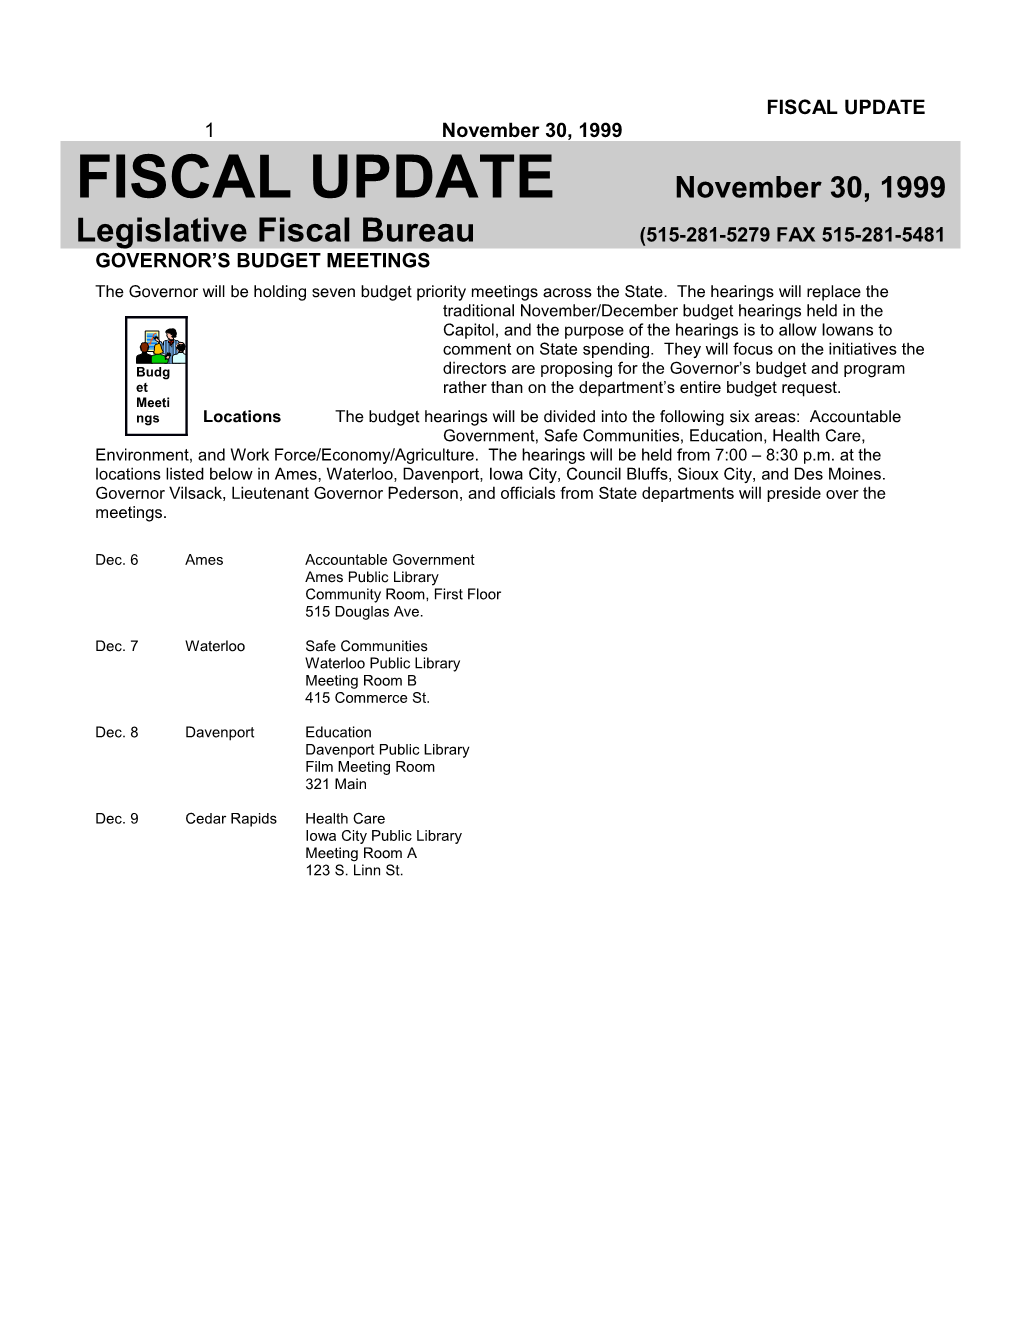 Legislative Fiscal Bureau(515-281-5279 FAX 515-281-5481